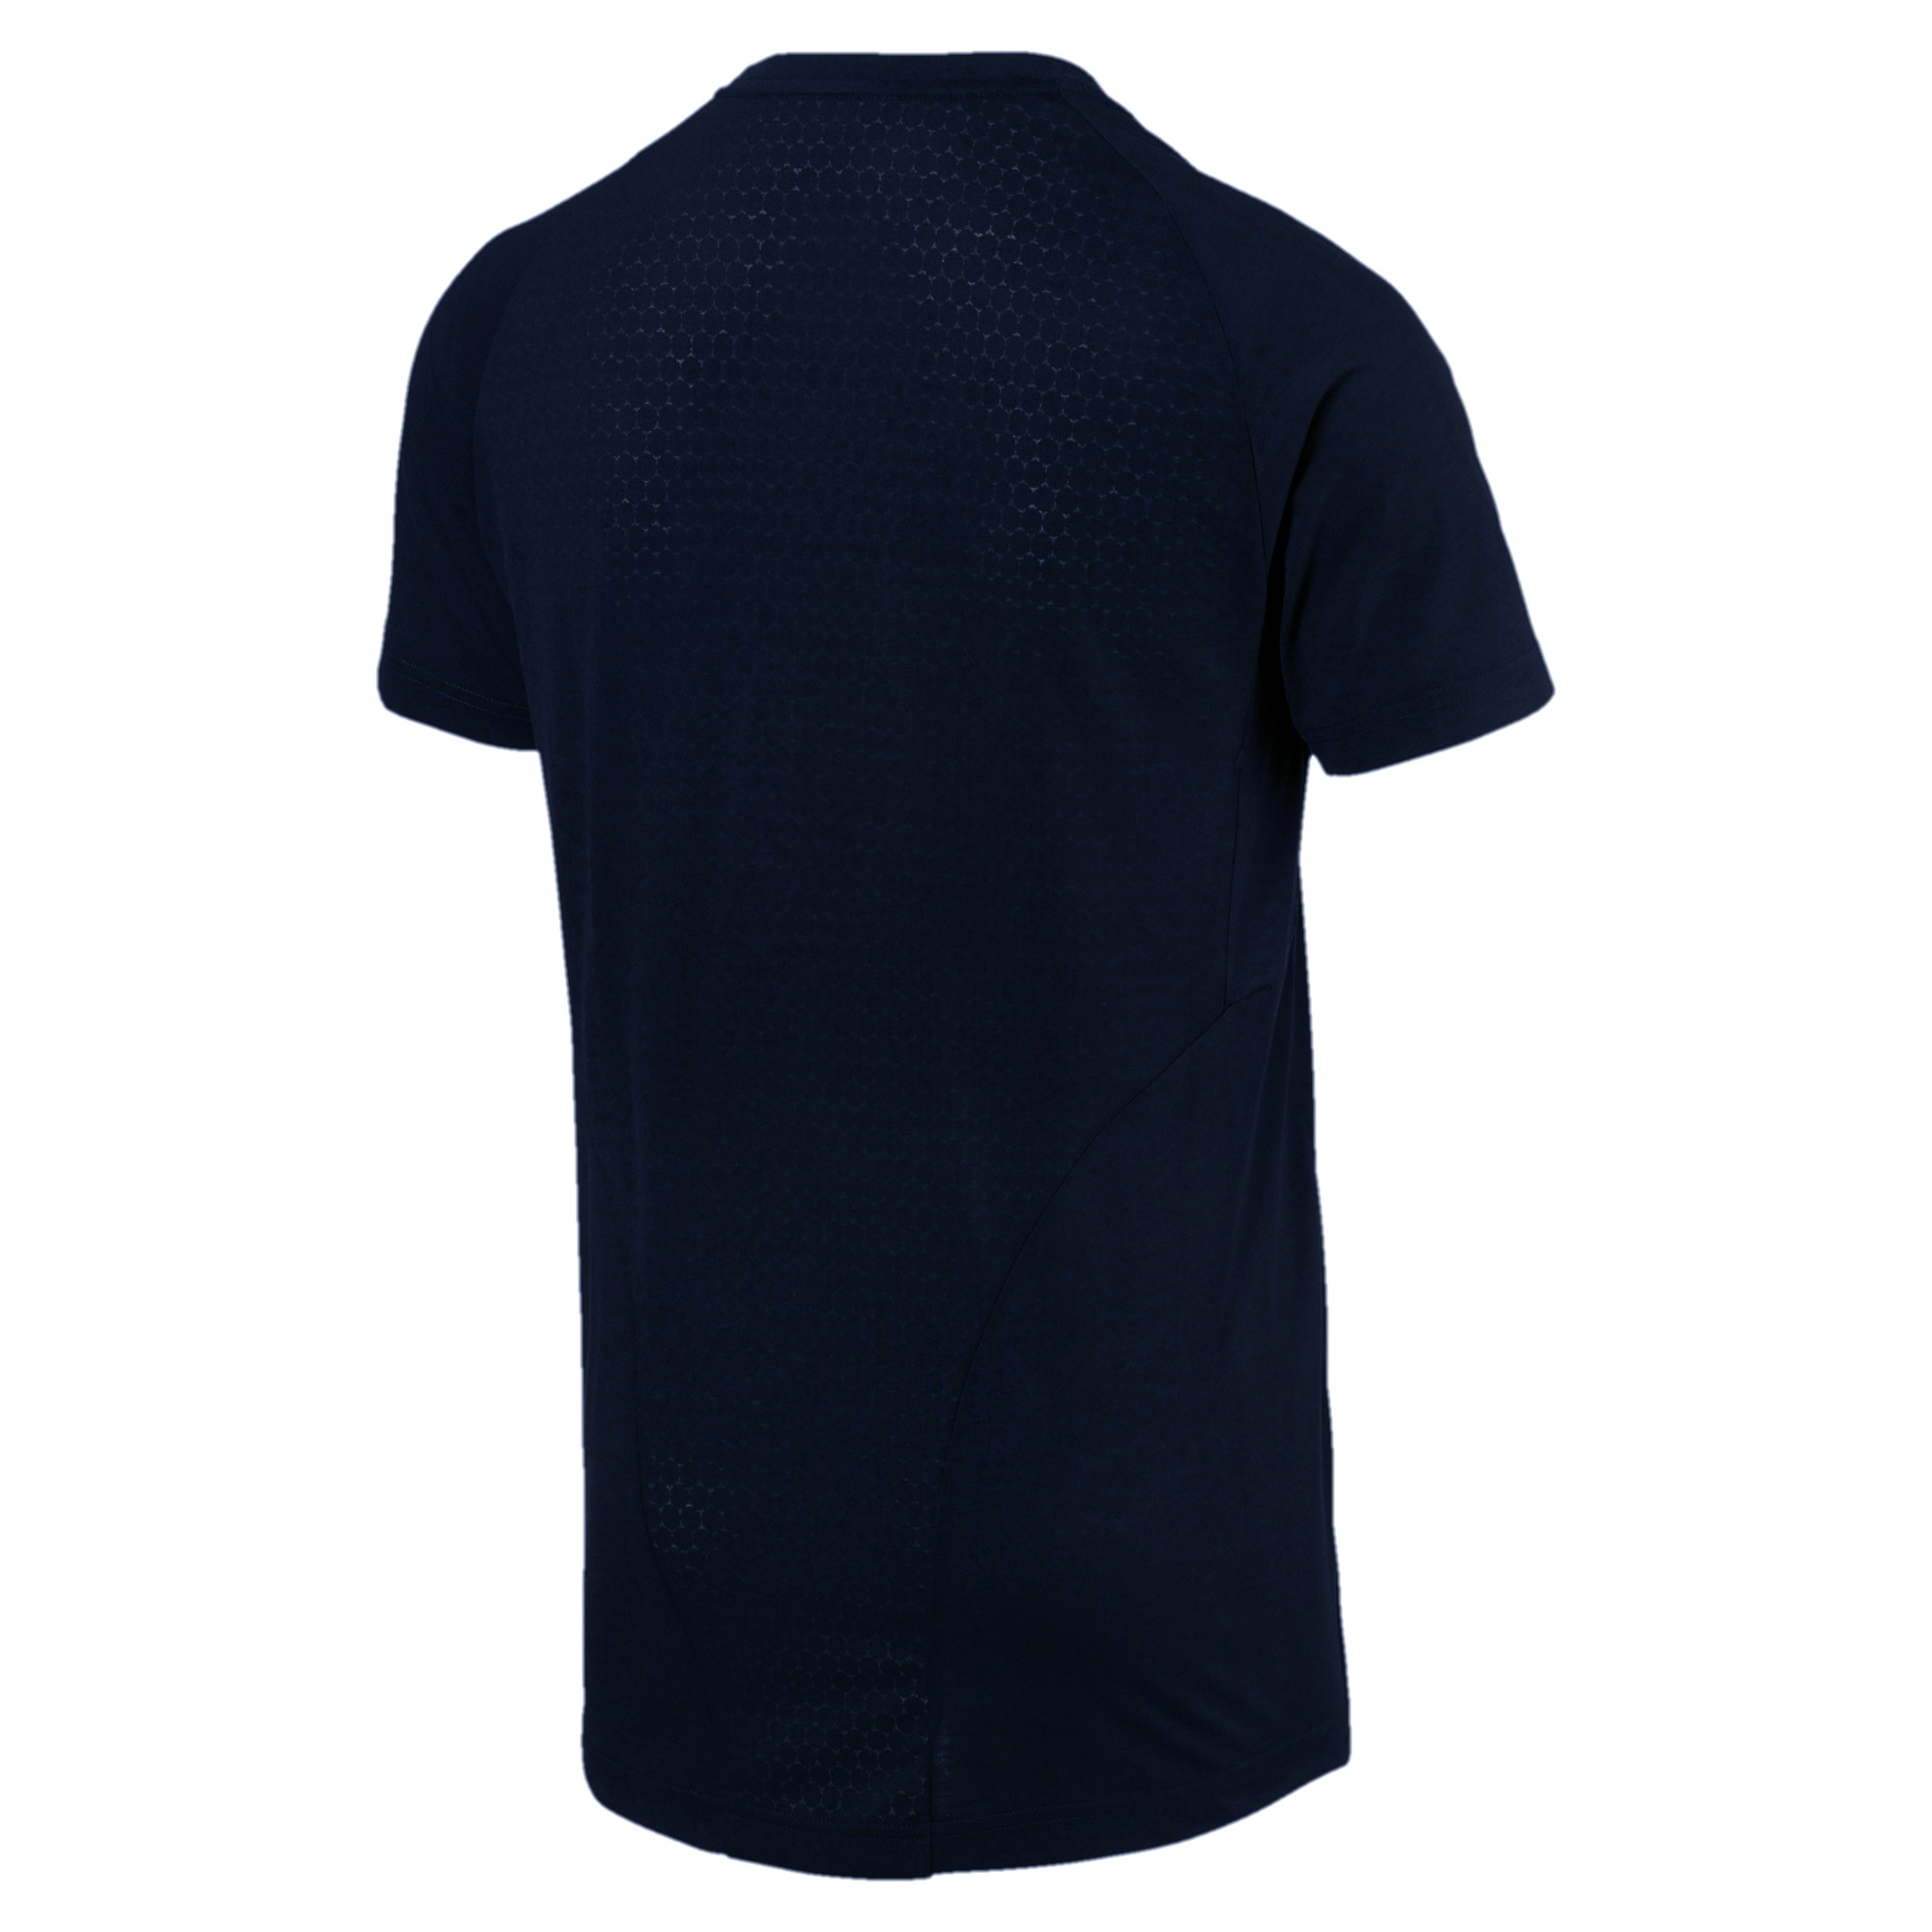 PUMA Evostripe Move Tee Herren T-shirt Sportswear 854071 06 Blau